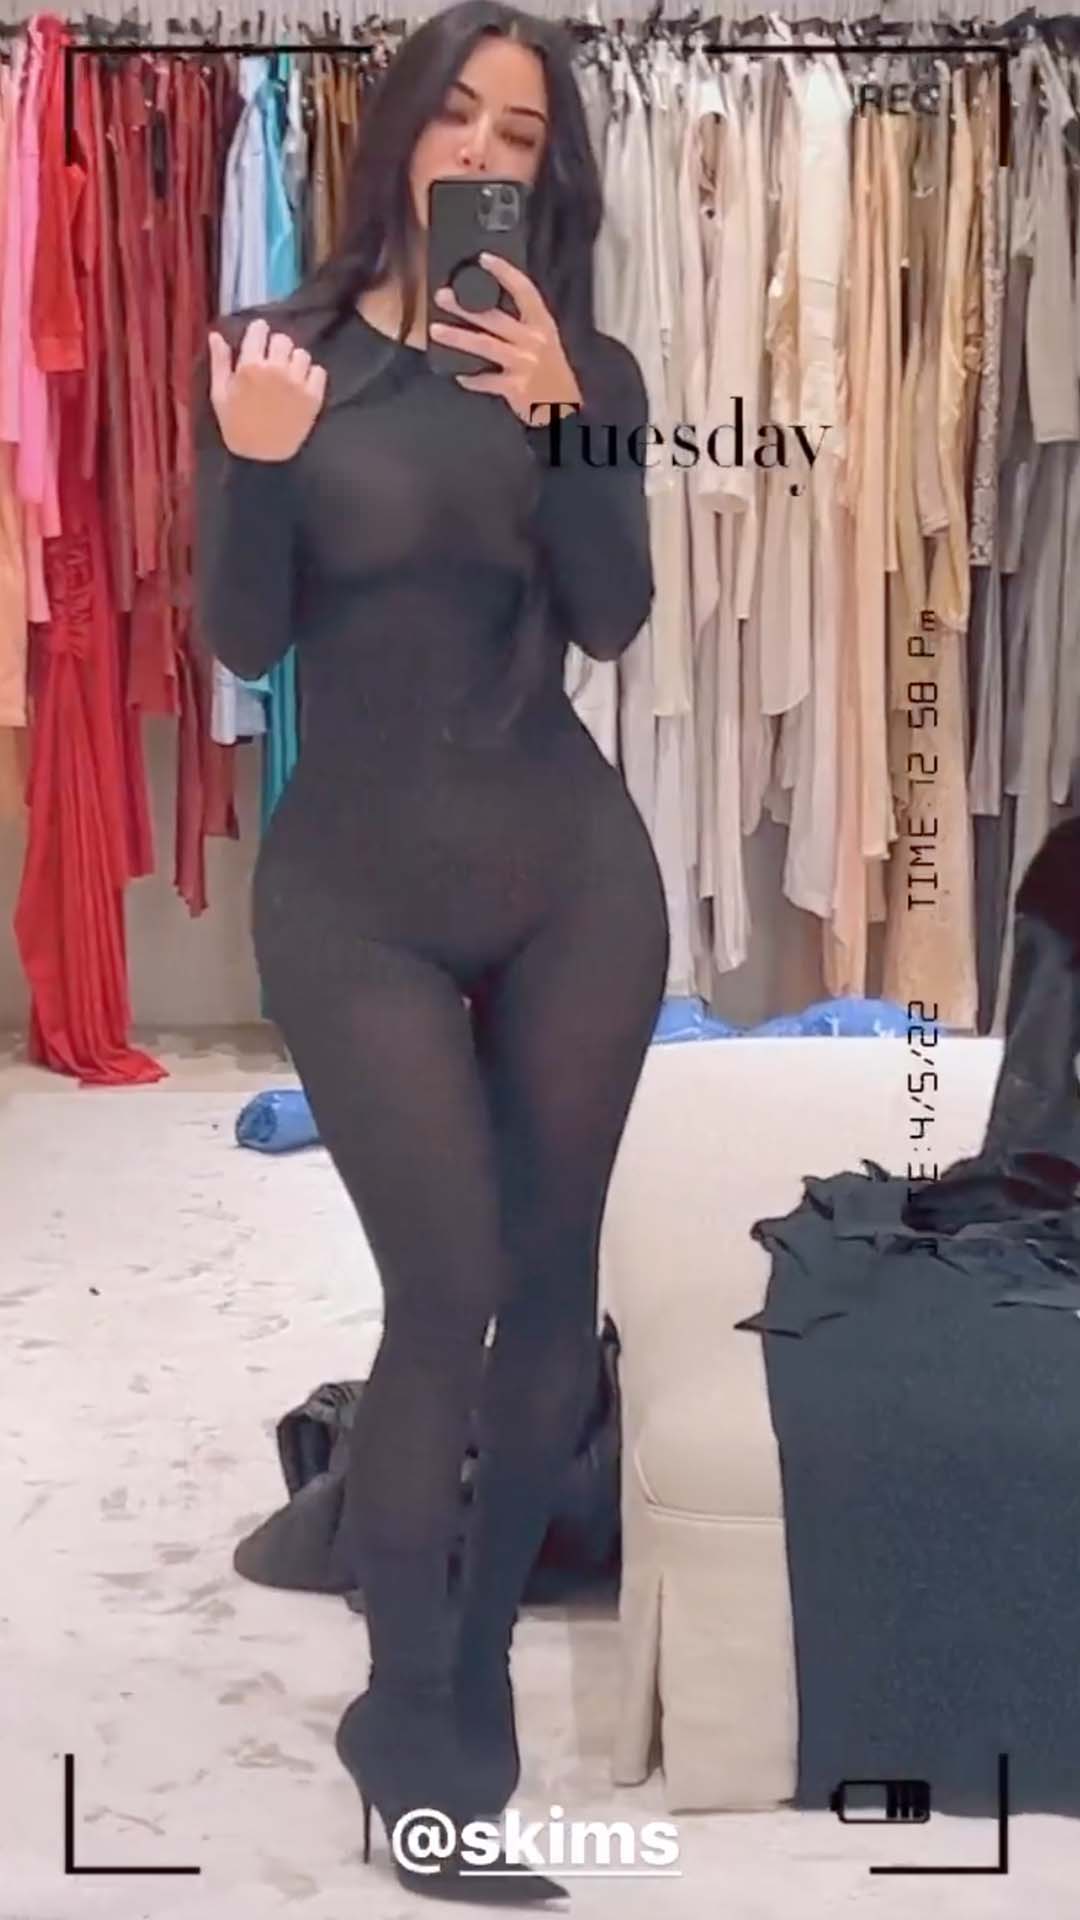 Kim Kardashian wardrobe malfunction neon dress Miami